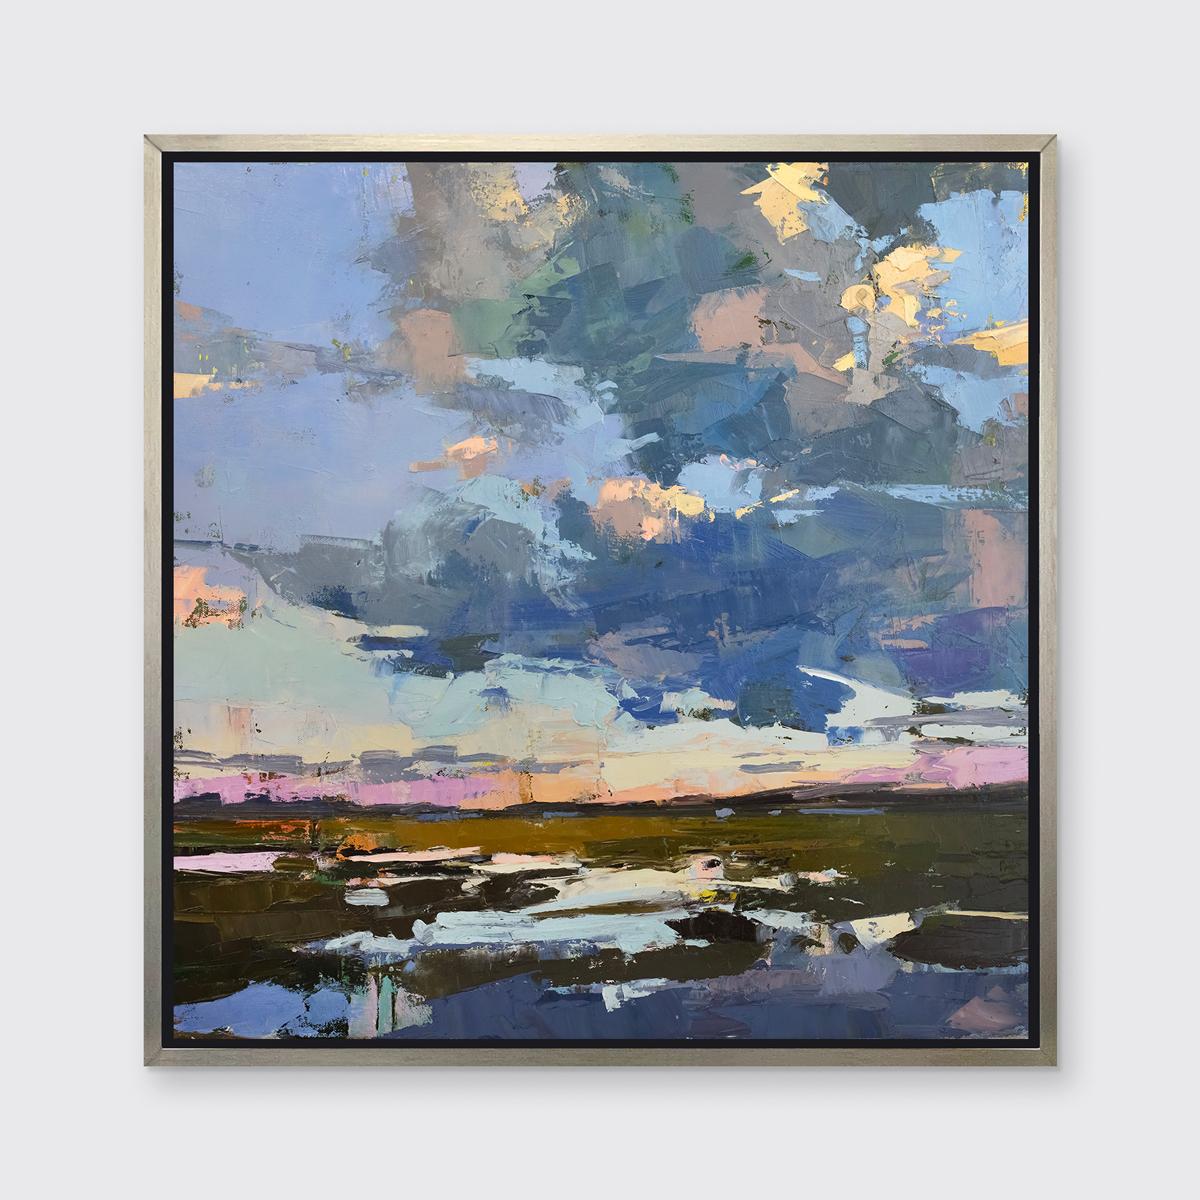 Bri Custer Landscape Print - "Missed" Framed Limited Edition Print, 40" x 40"